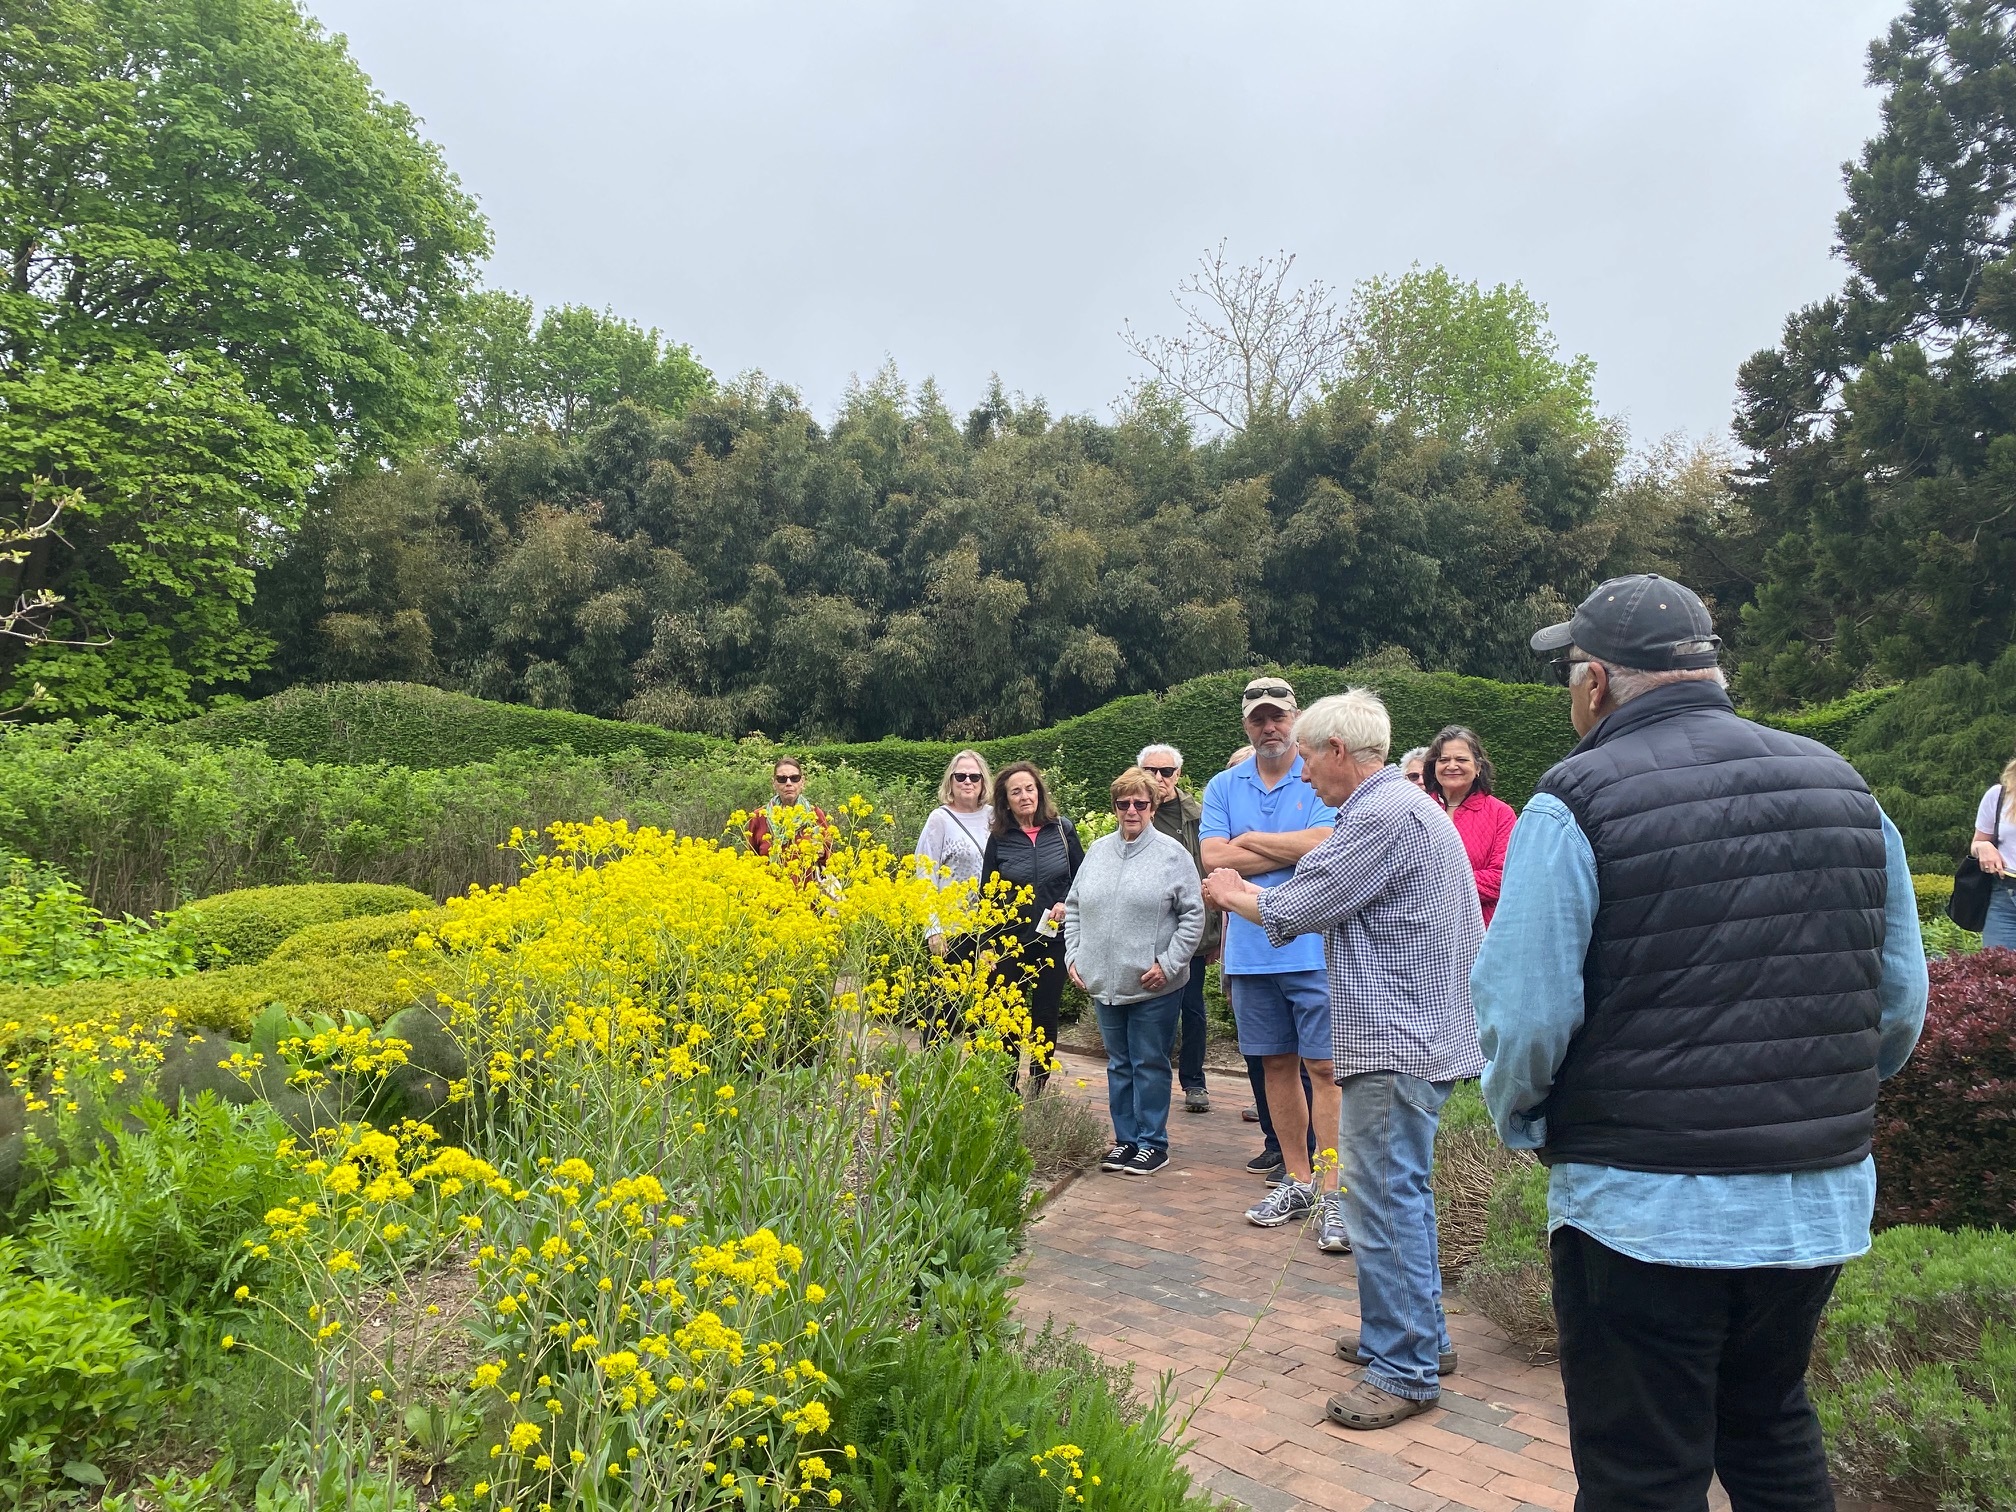 tour near the herb garden